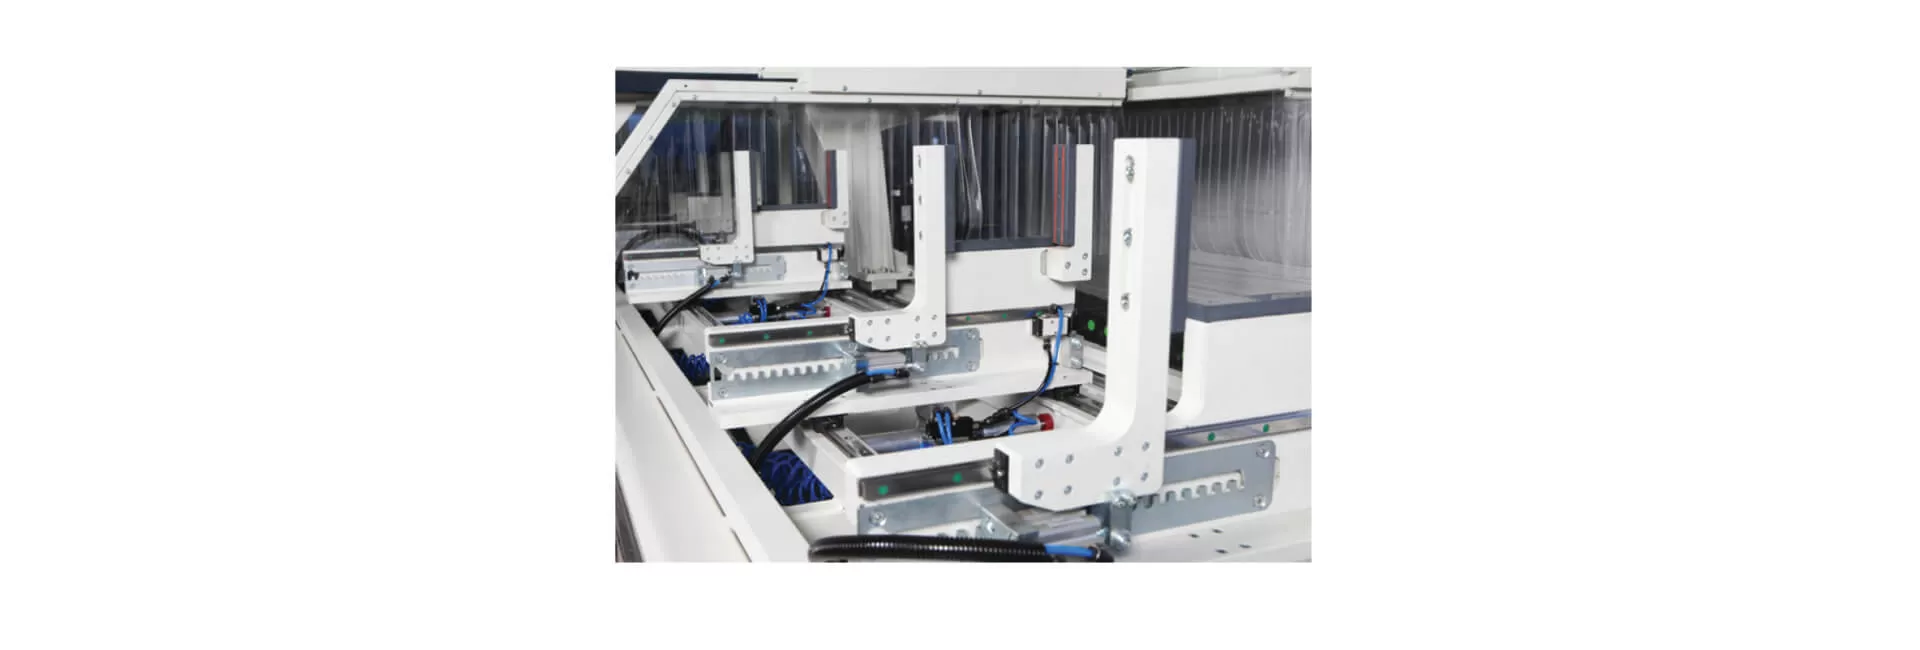 INO XP 7000 3-Achsen-CNC-Profilbearbeitungszentrum